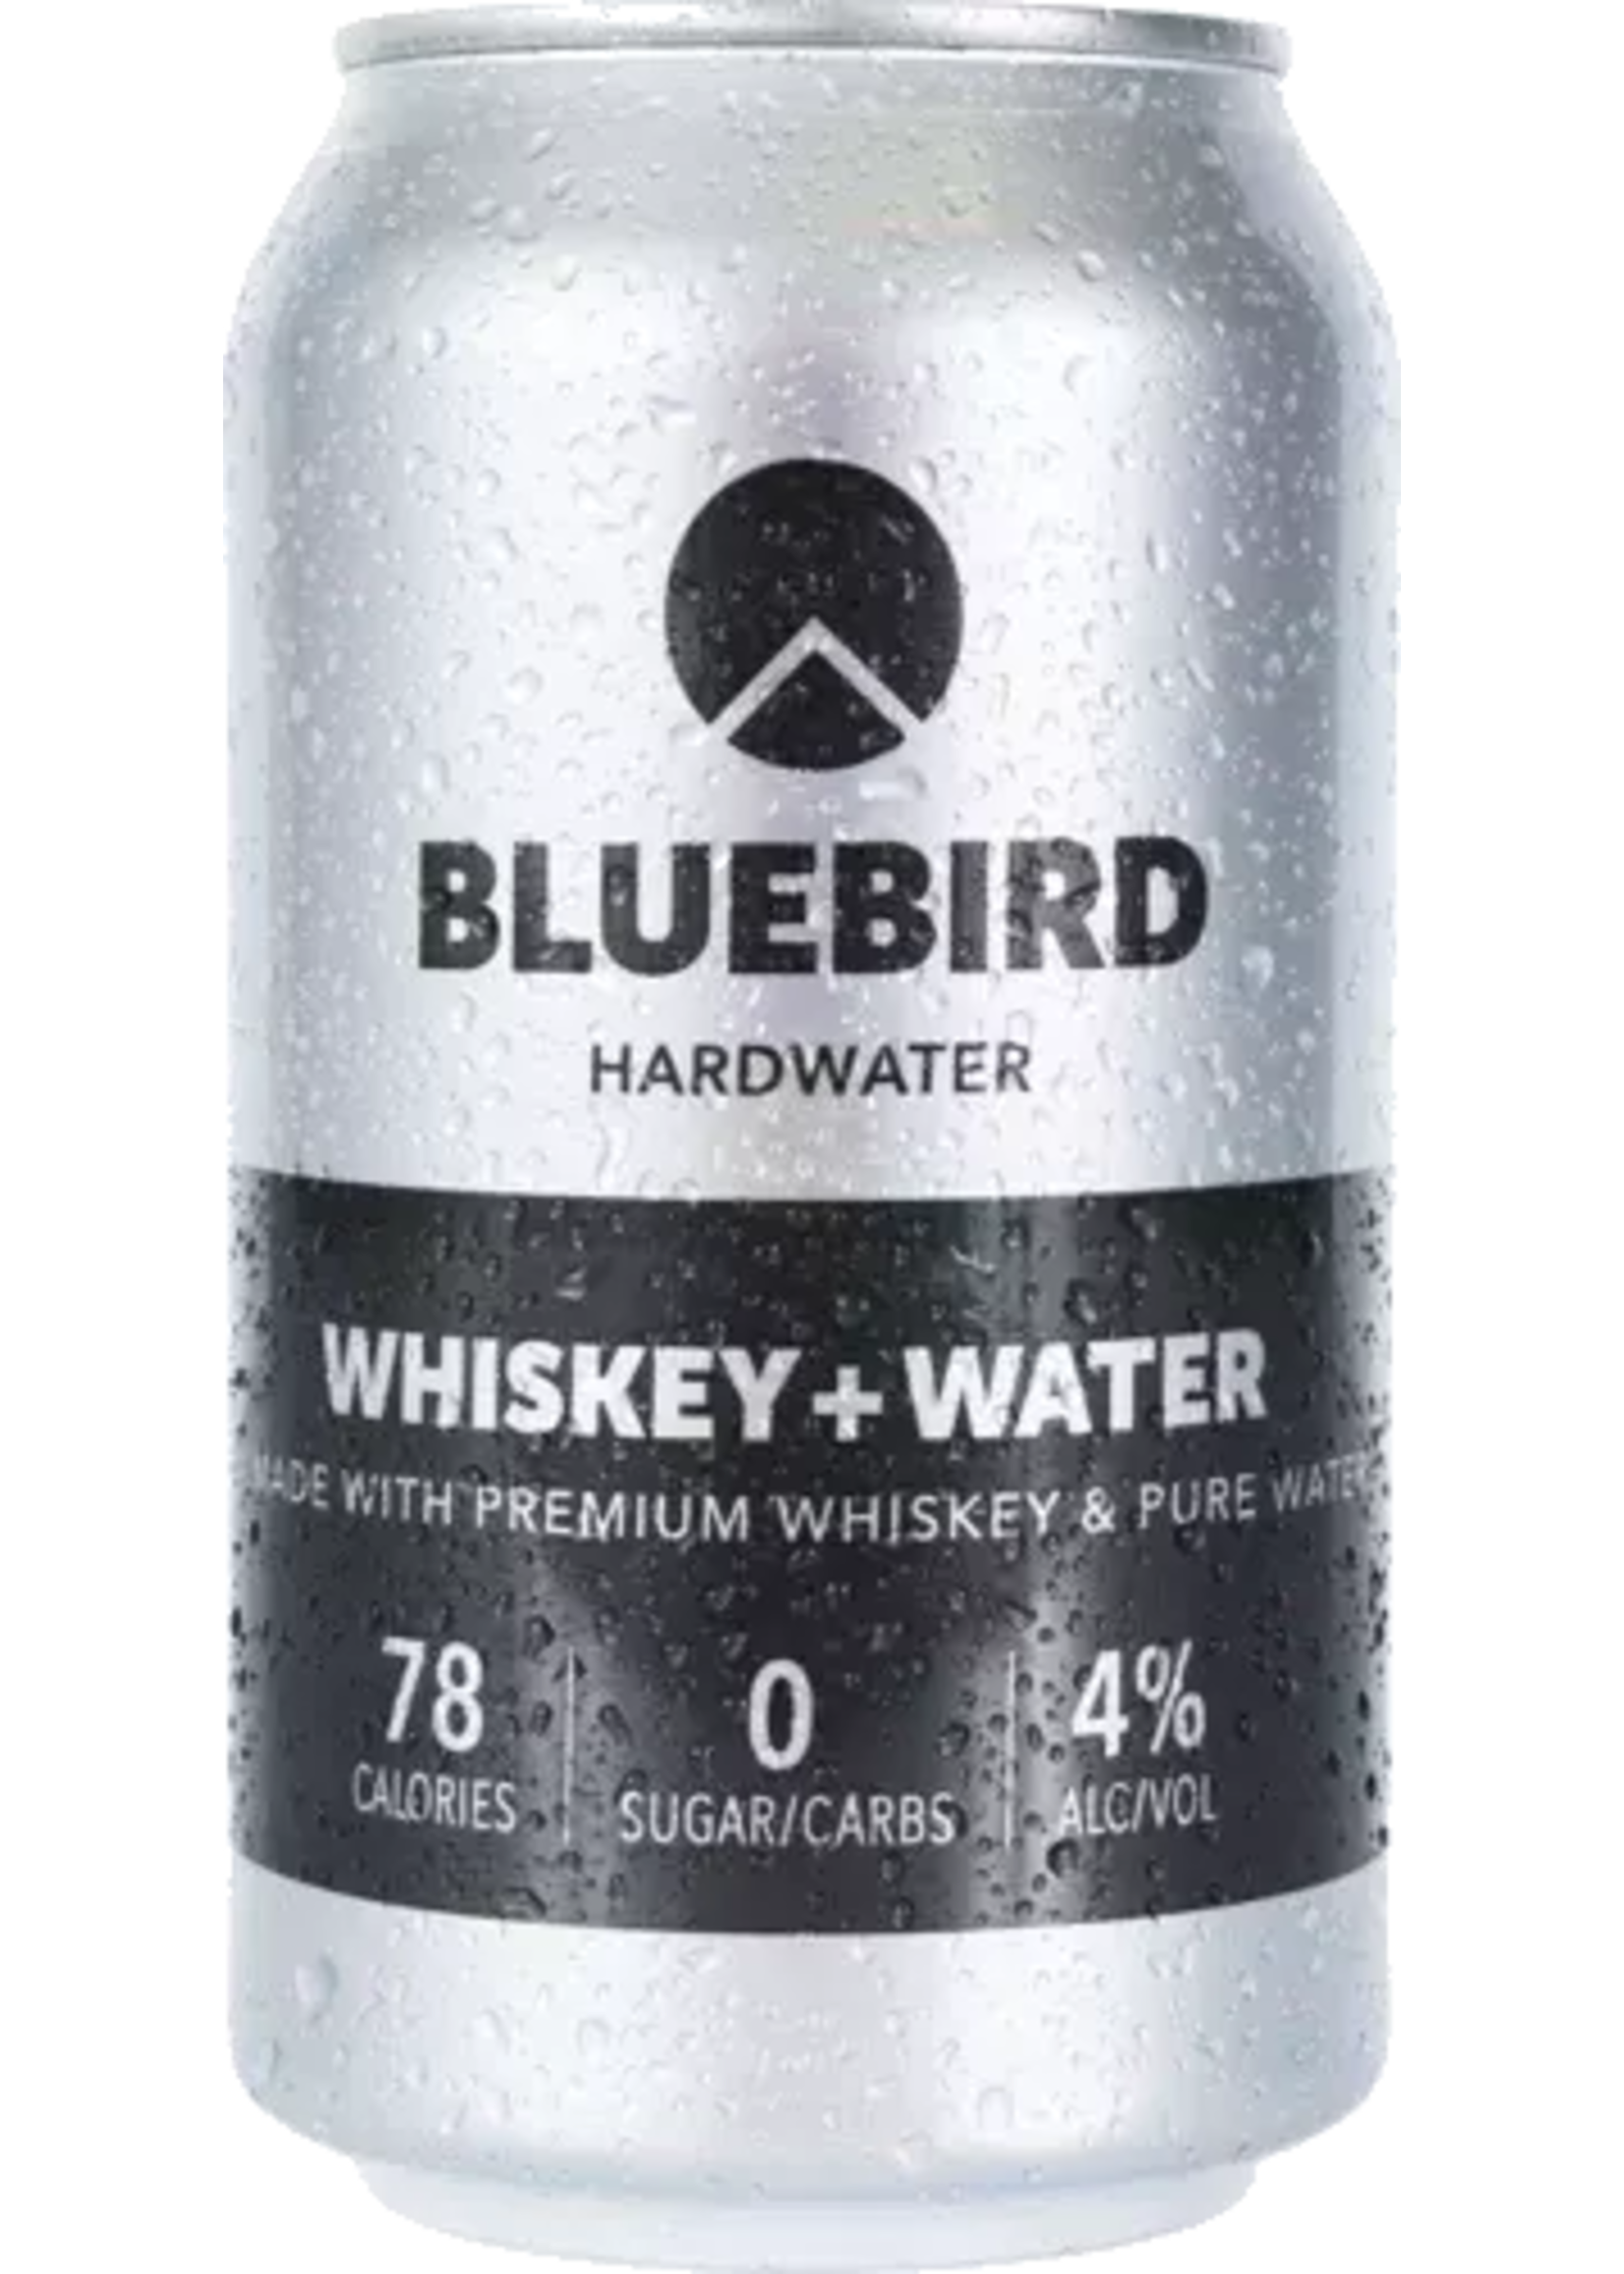 Bluebird Bluebird Hardwater / Whiskey + Water 4% abv  / 355mL 4x Cans